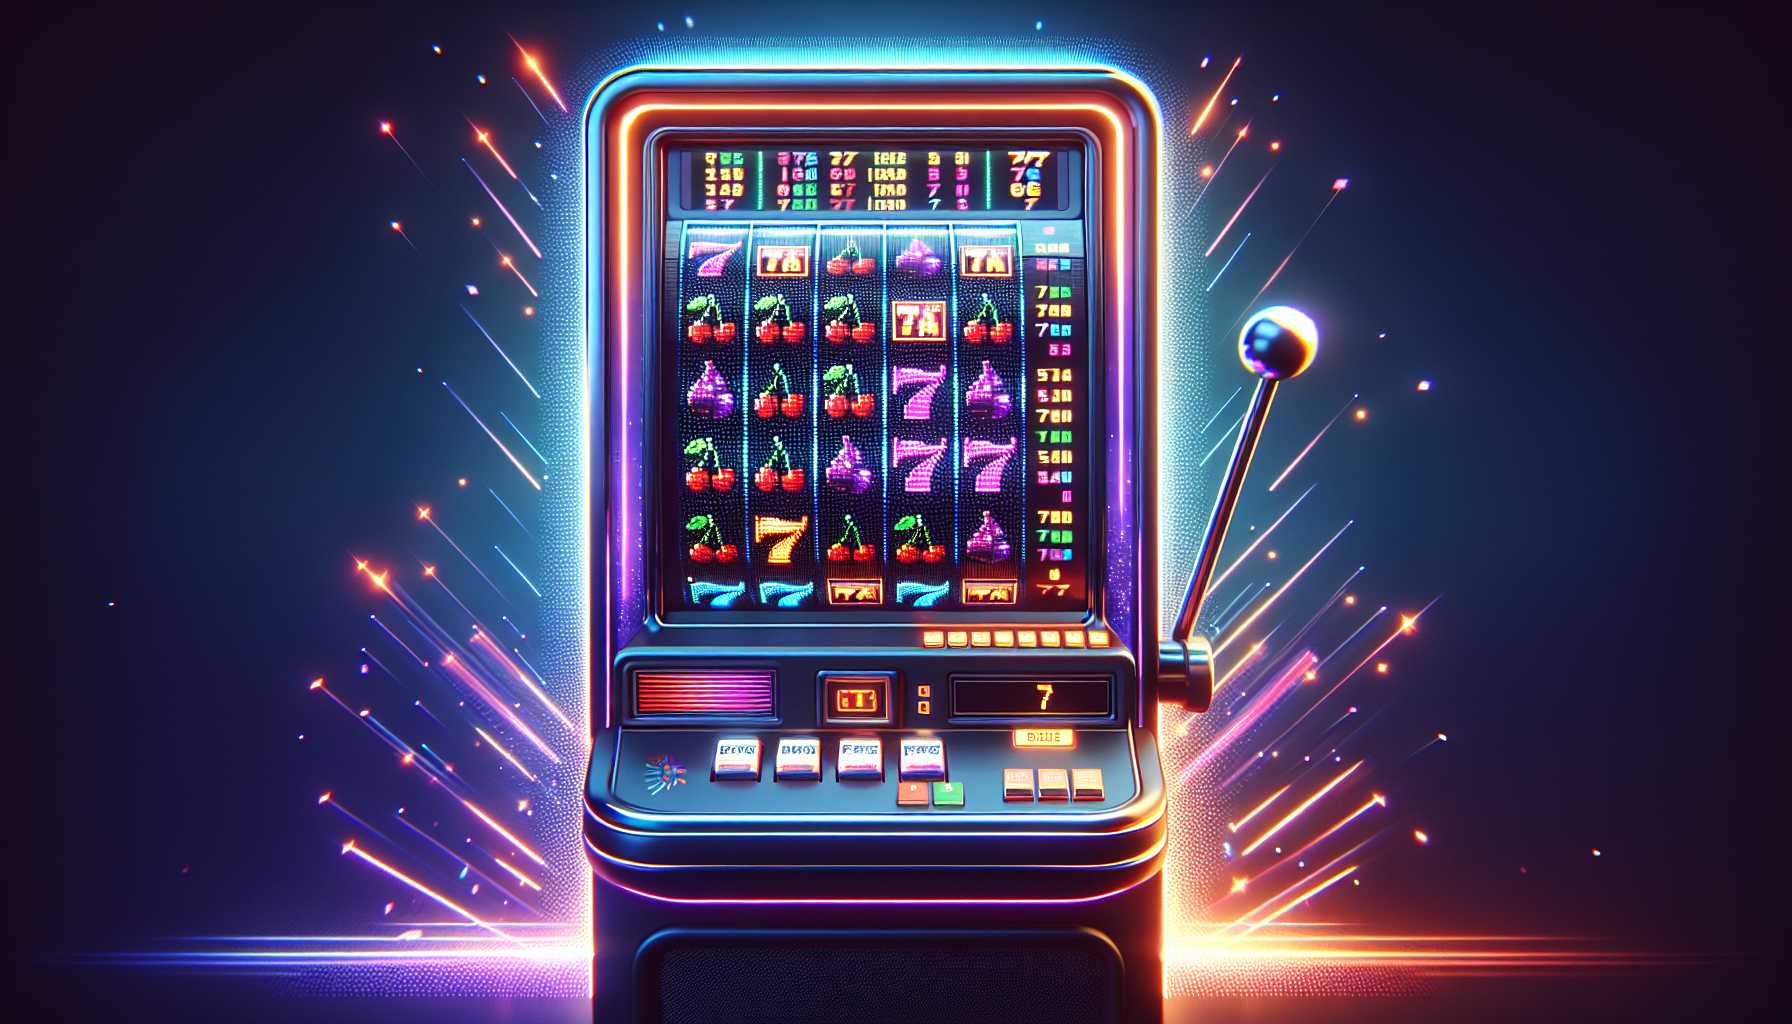 Virtual slot machine with colorful symbols